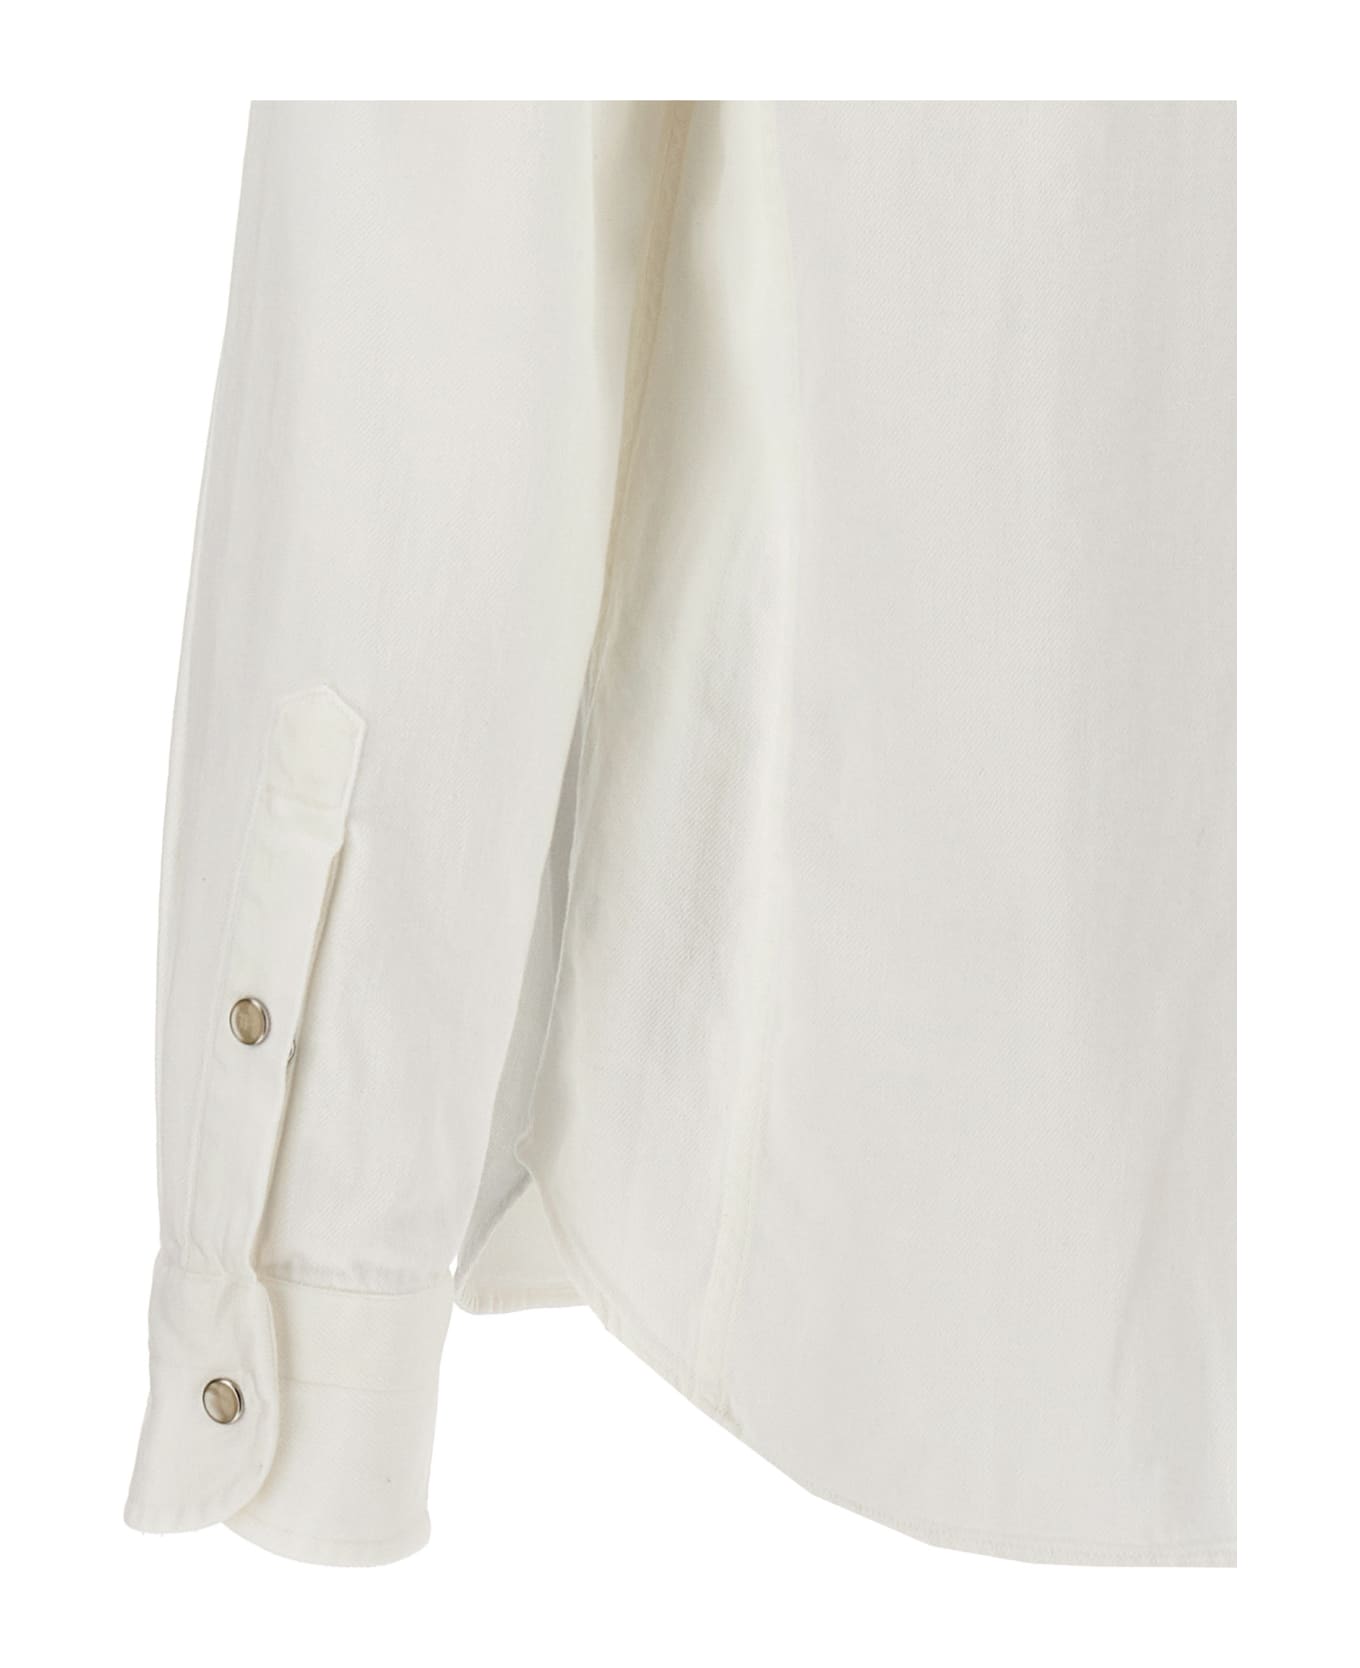 Tom Ford Denim Shirt - White シャツ